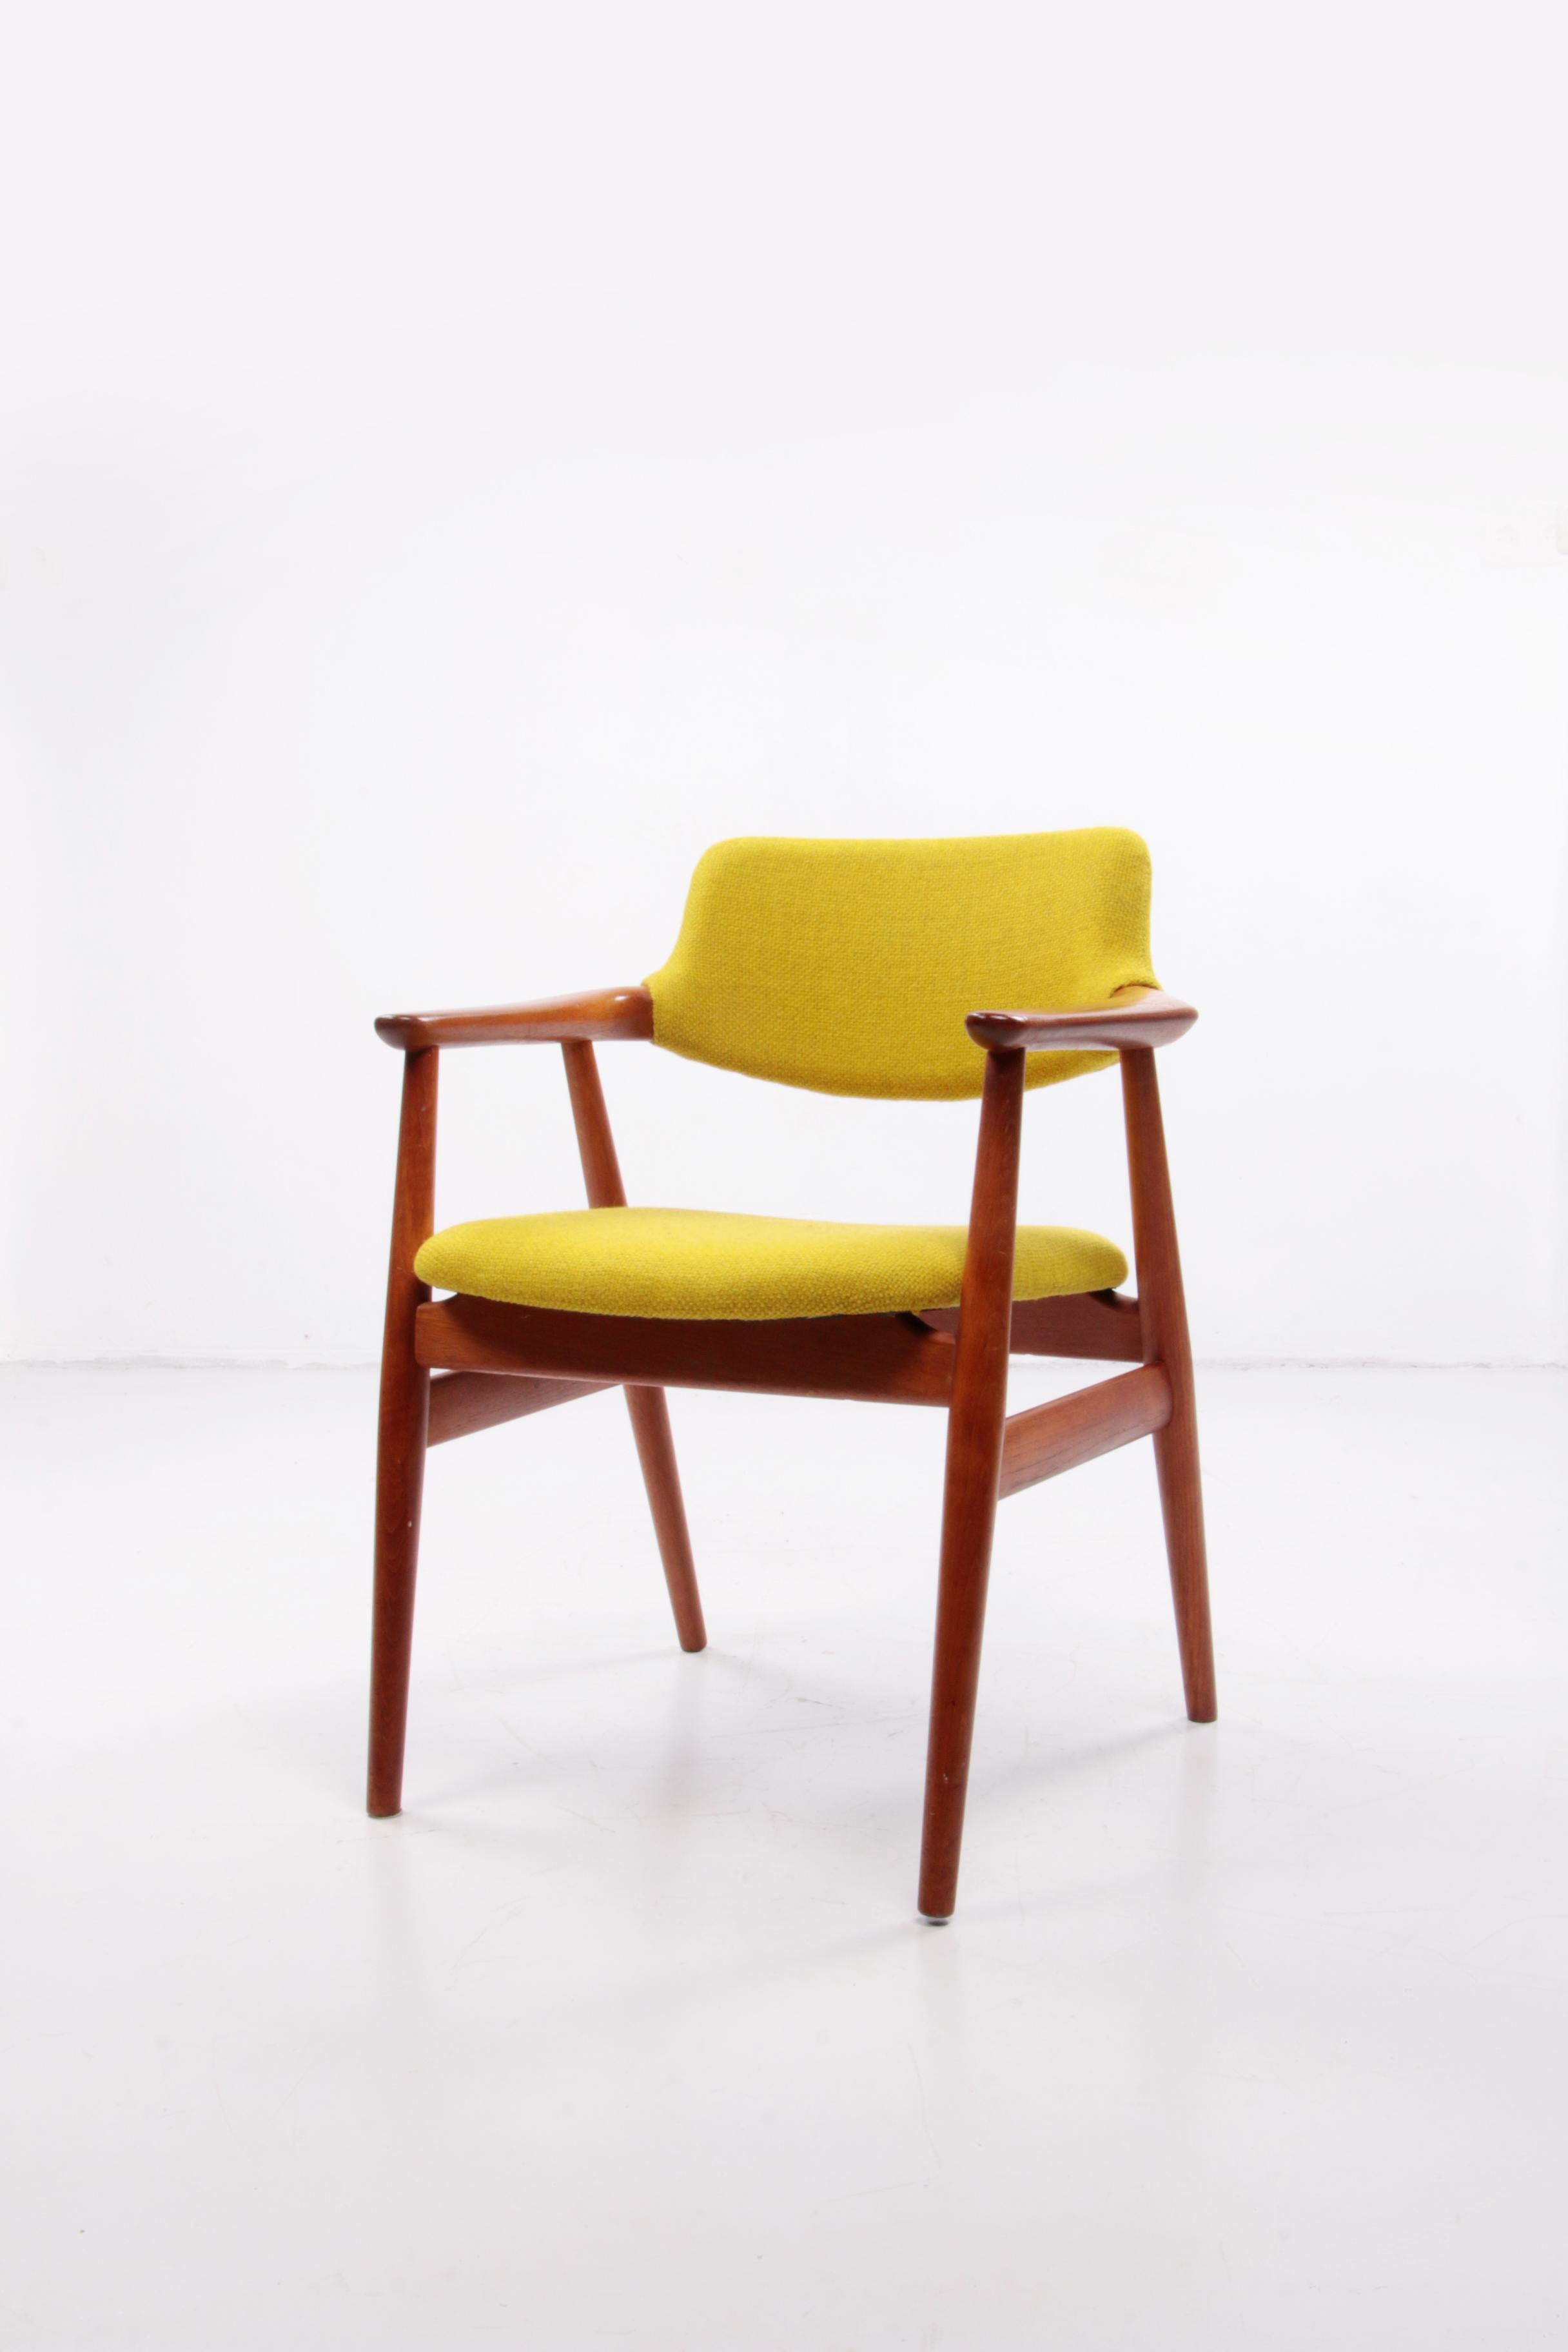 Teak Danish Dining Room Chair by Svend Age Eriksen Model Gm11, 1960s